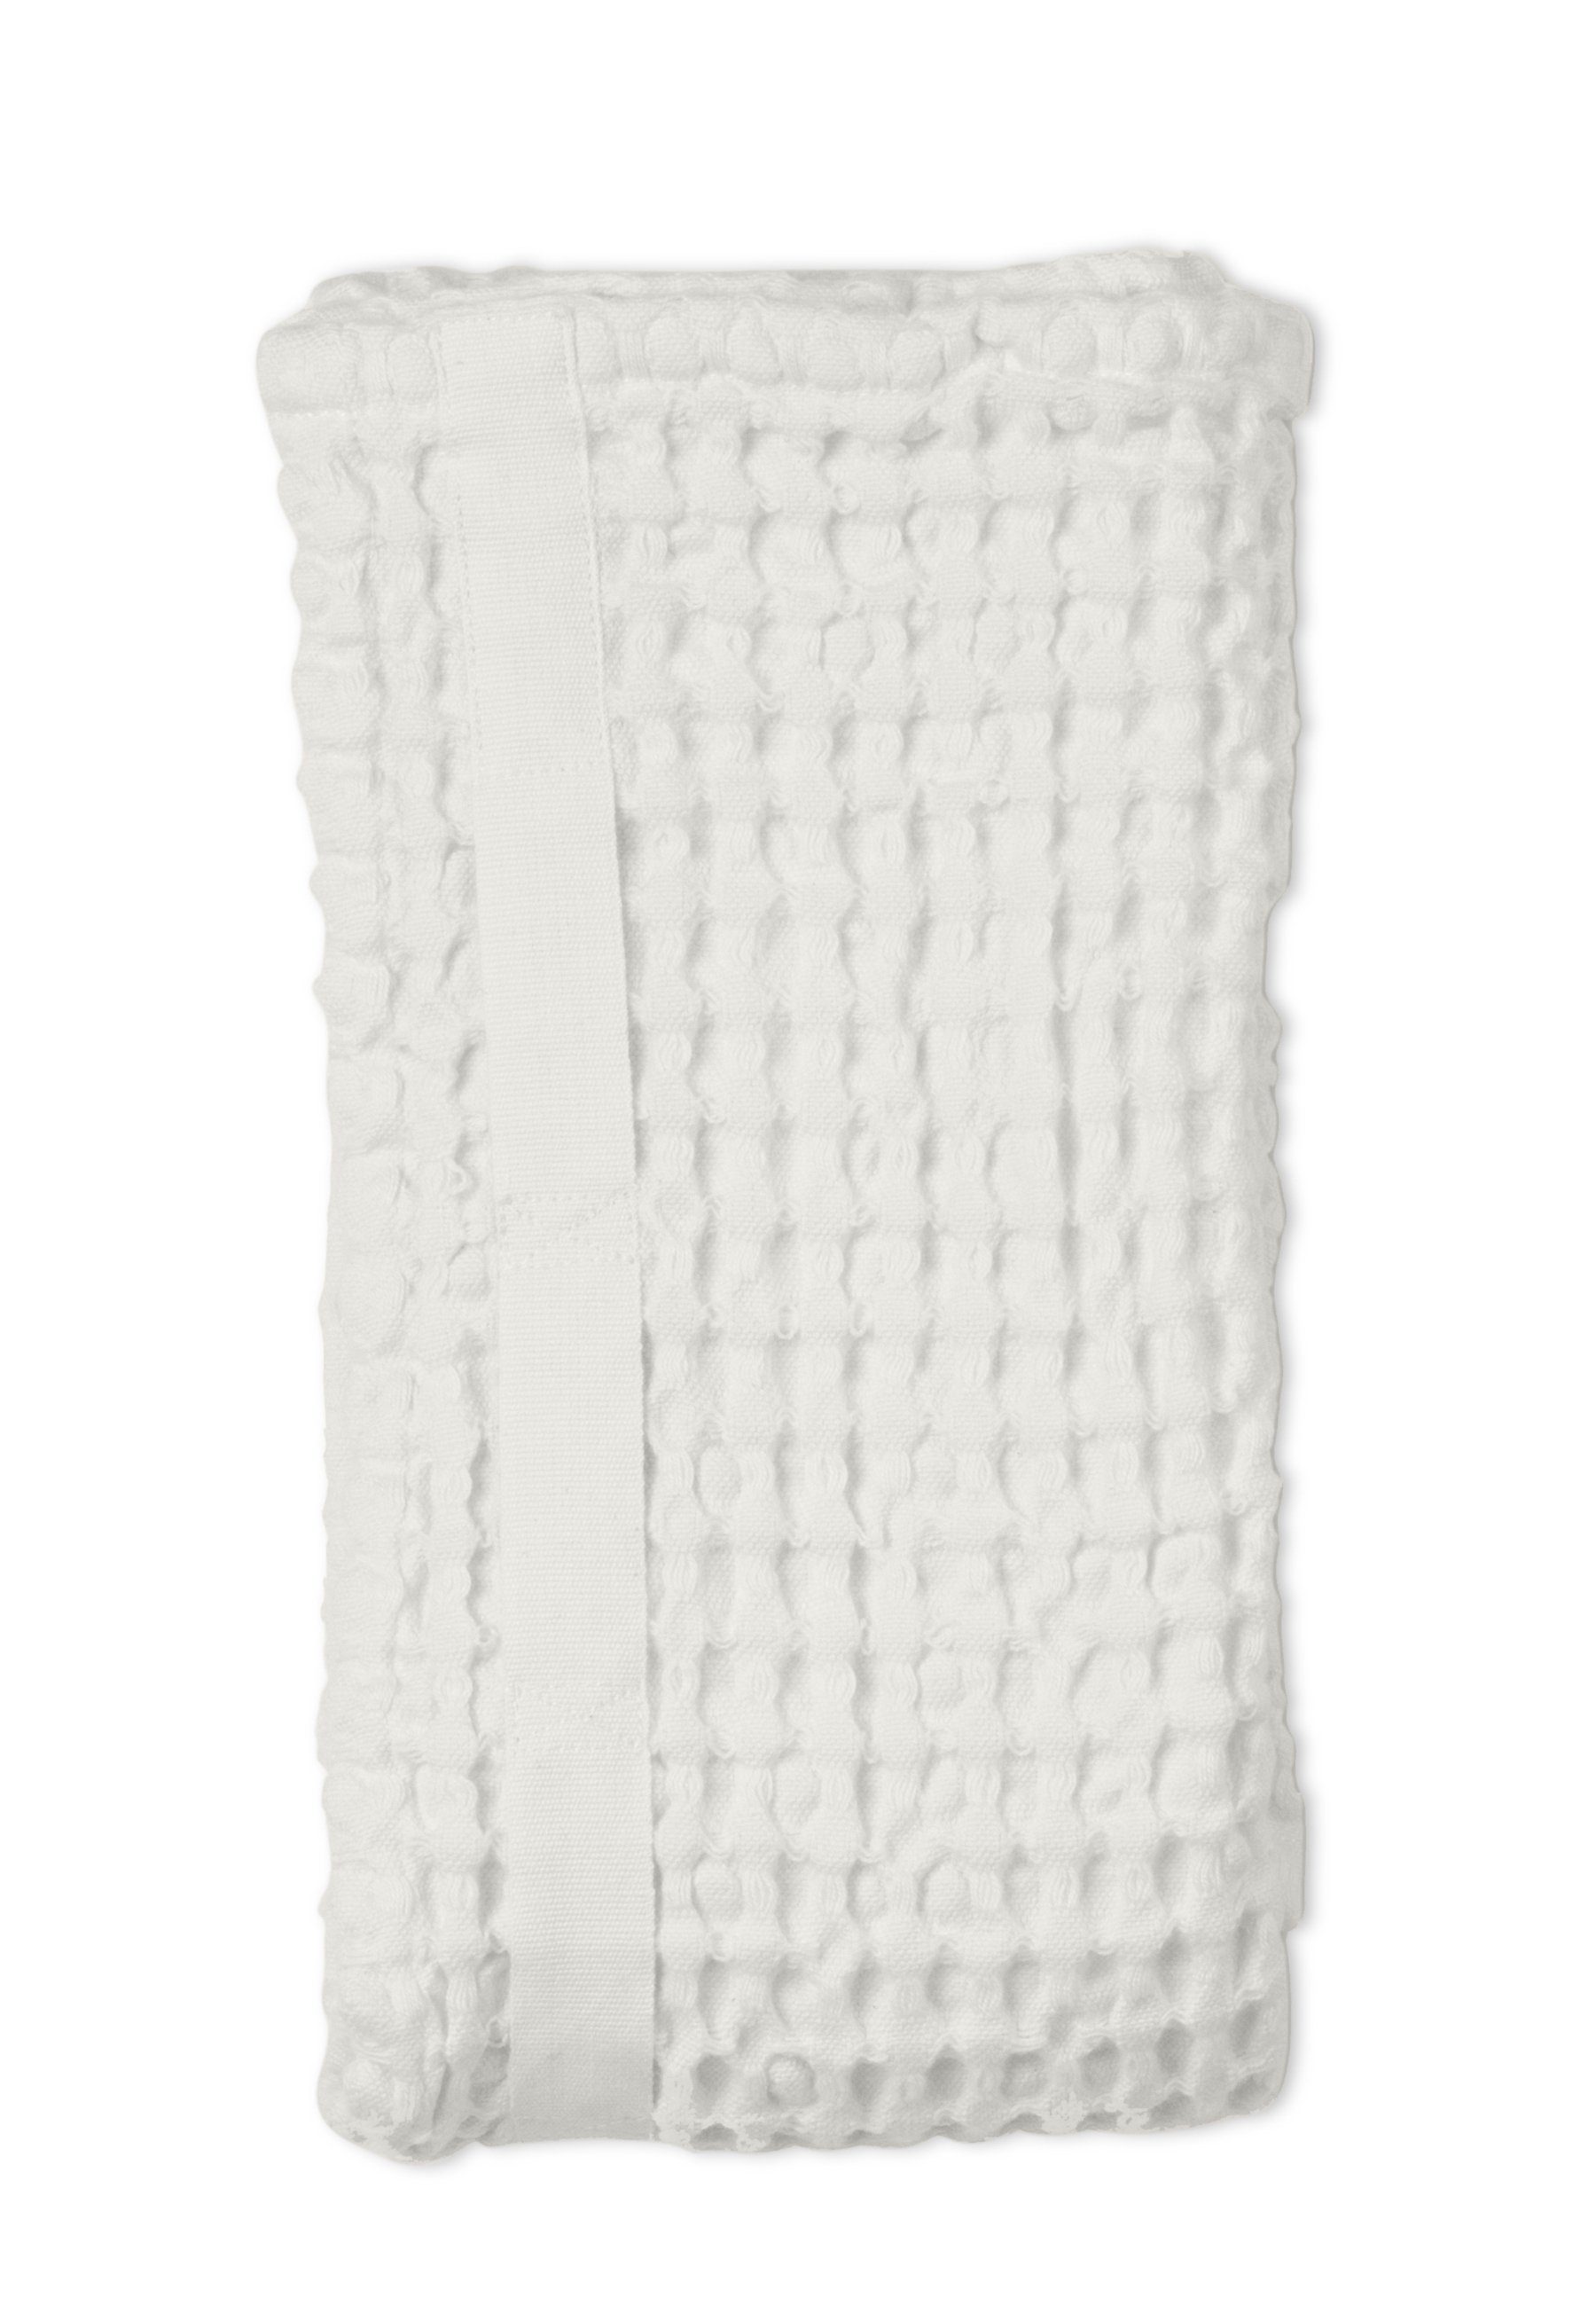 The Organic Company Handtuch Big Waffle Bio-Baumwolle weiß Towel, - Hand Waffelpique, GOTS zertifizierte White Natural